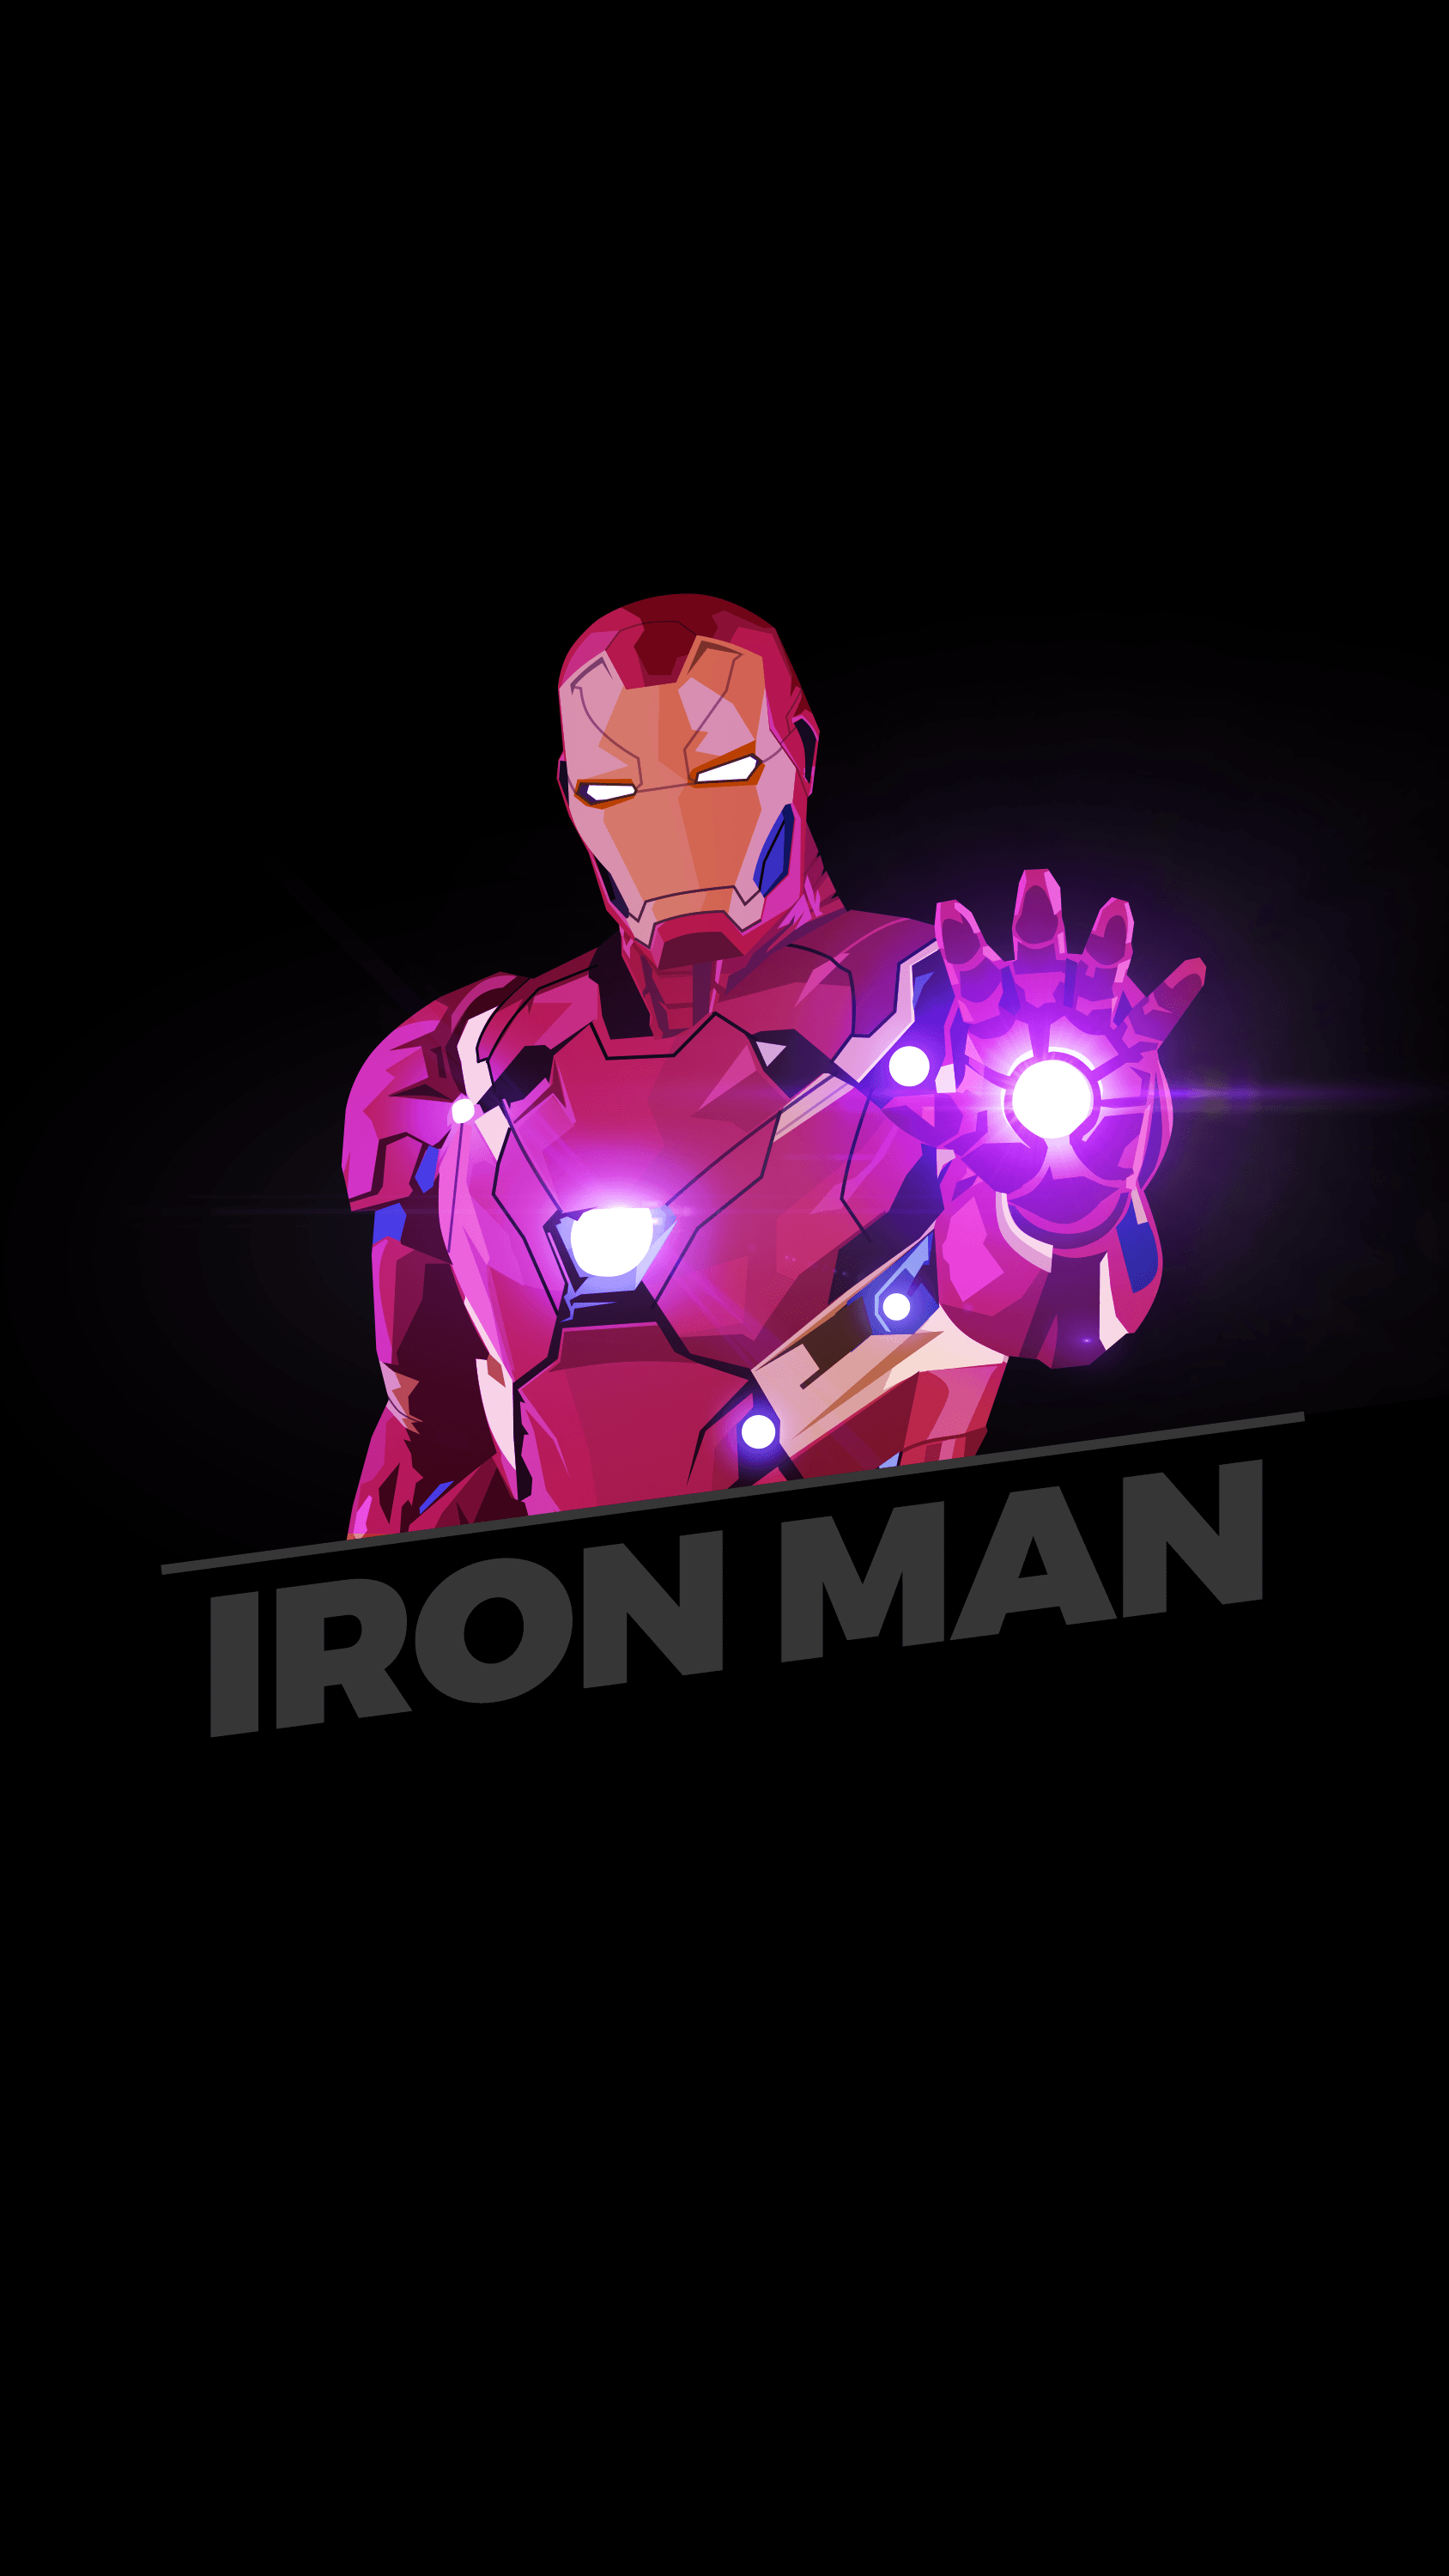 Iron Man OLED Wallpaper Free .wallpaperaccess.com